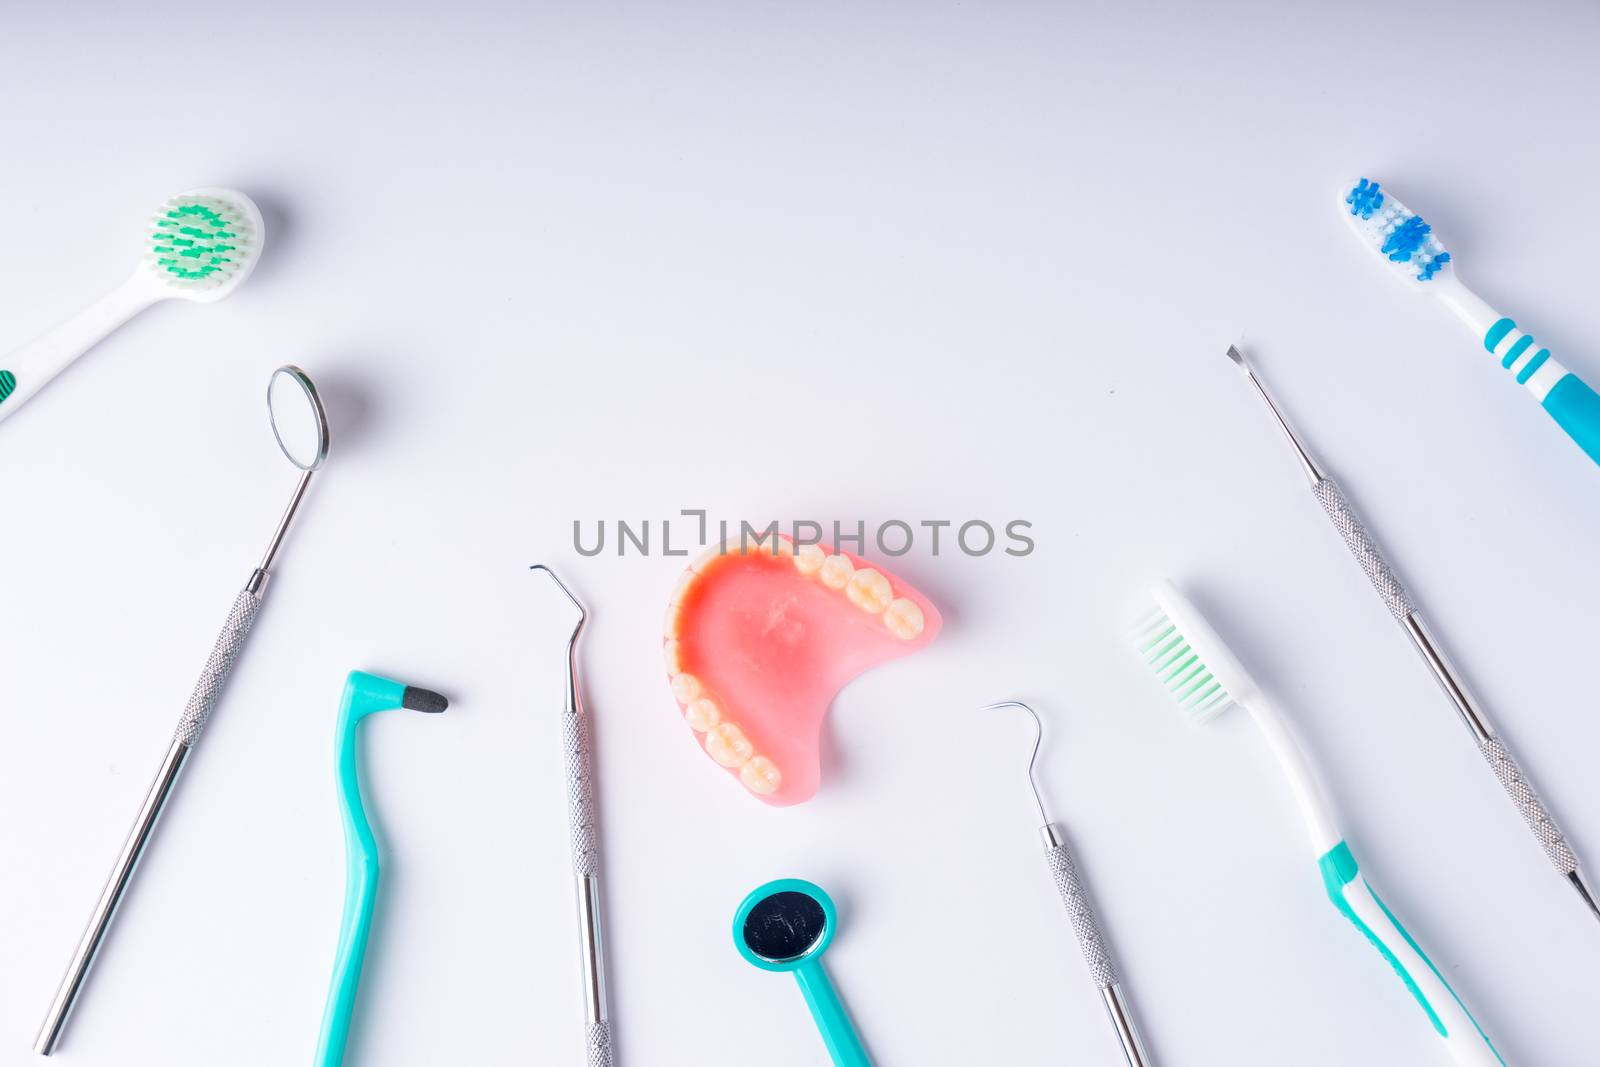 Set of metal Dentist's medical equipment tools, top view